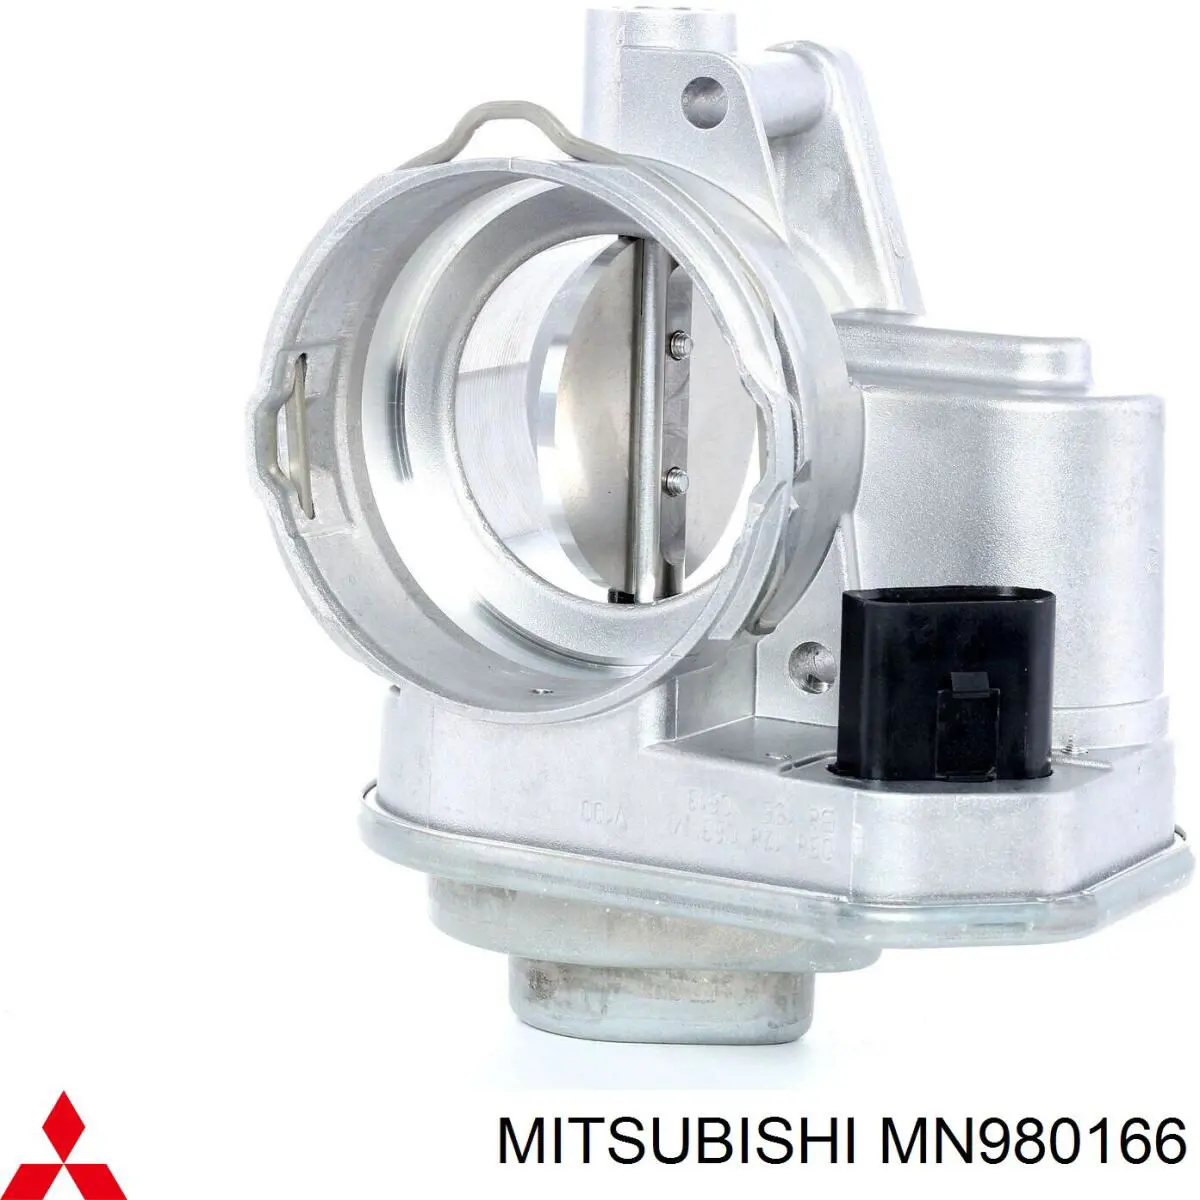 MN980166 Mitsubishi 